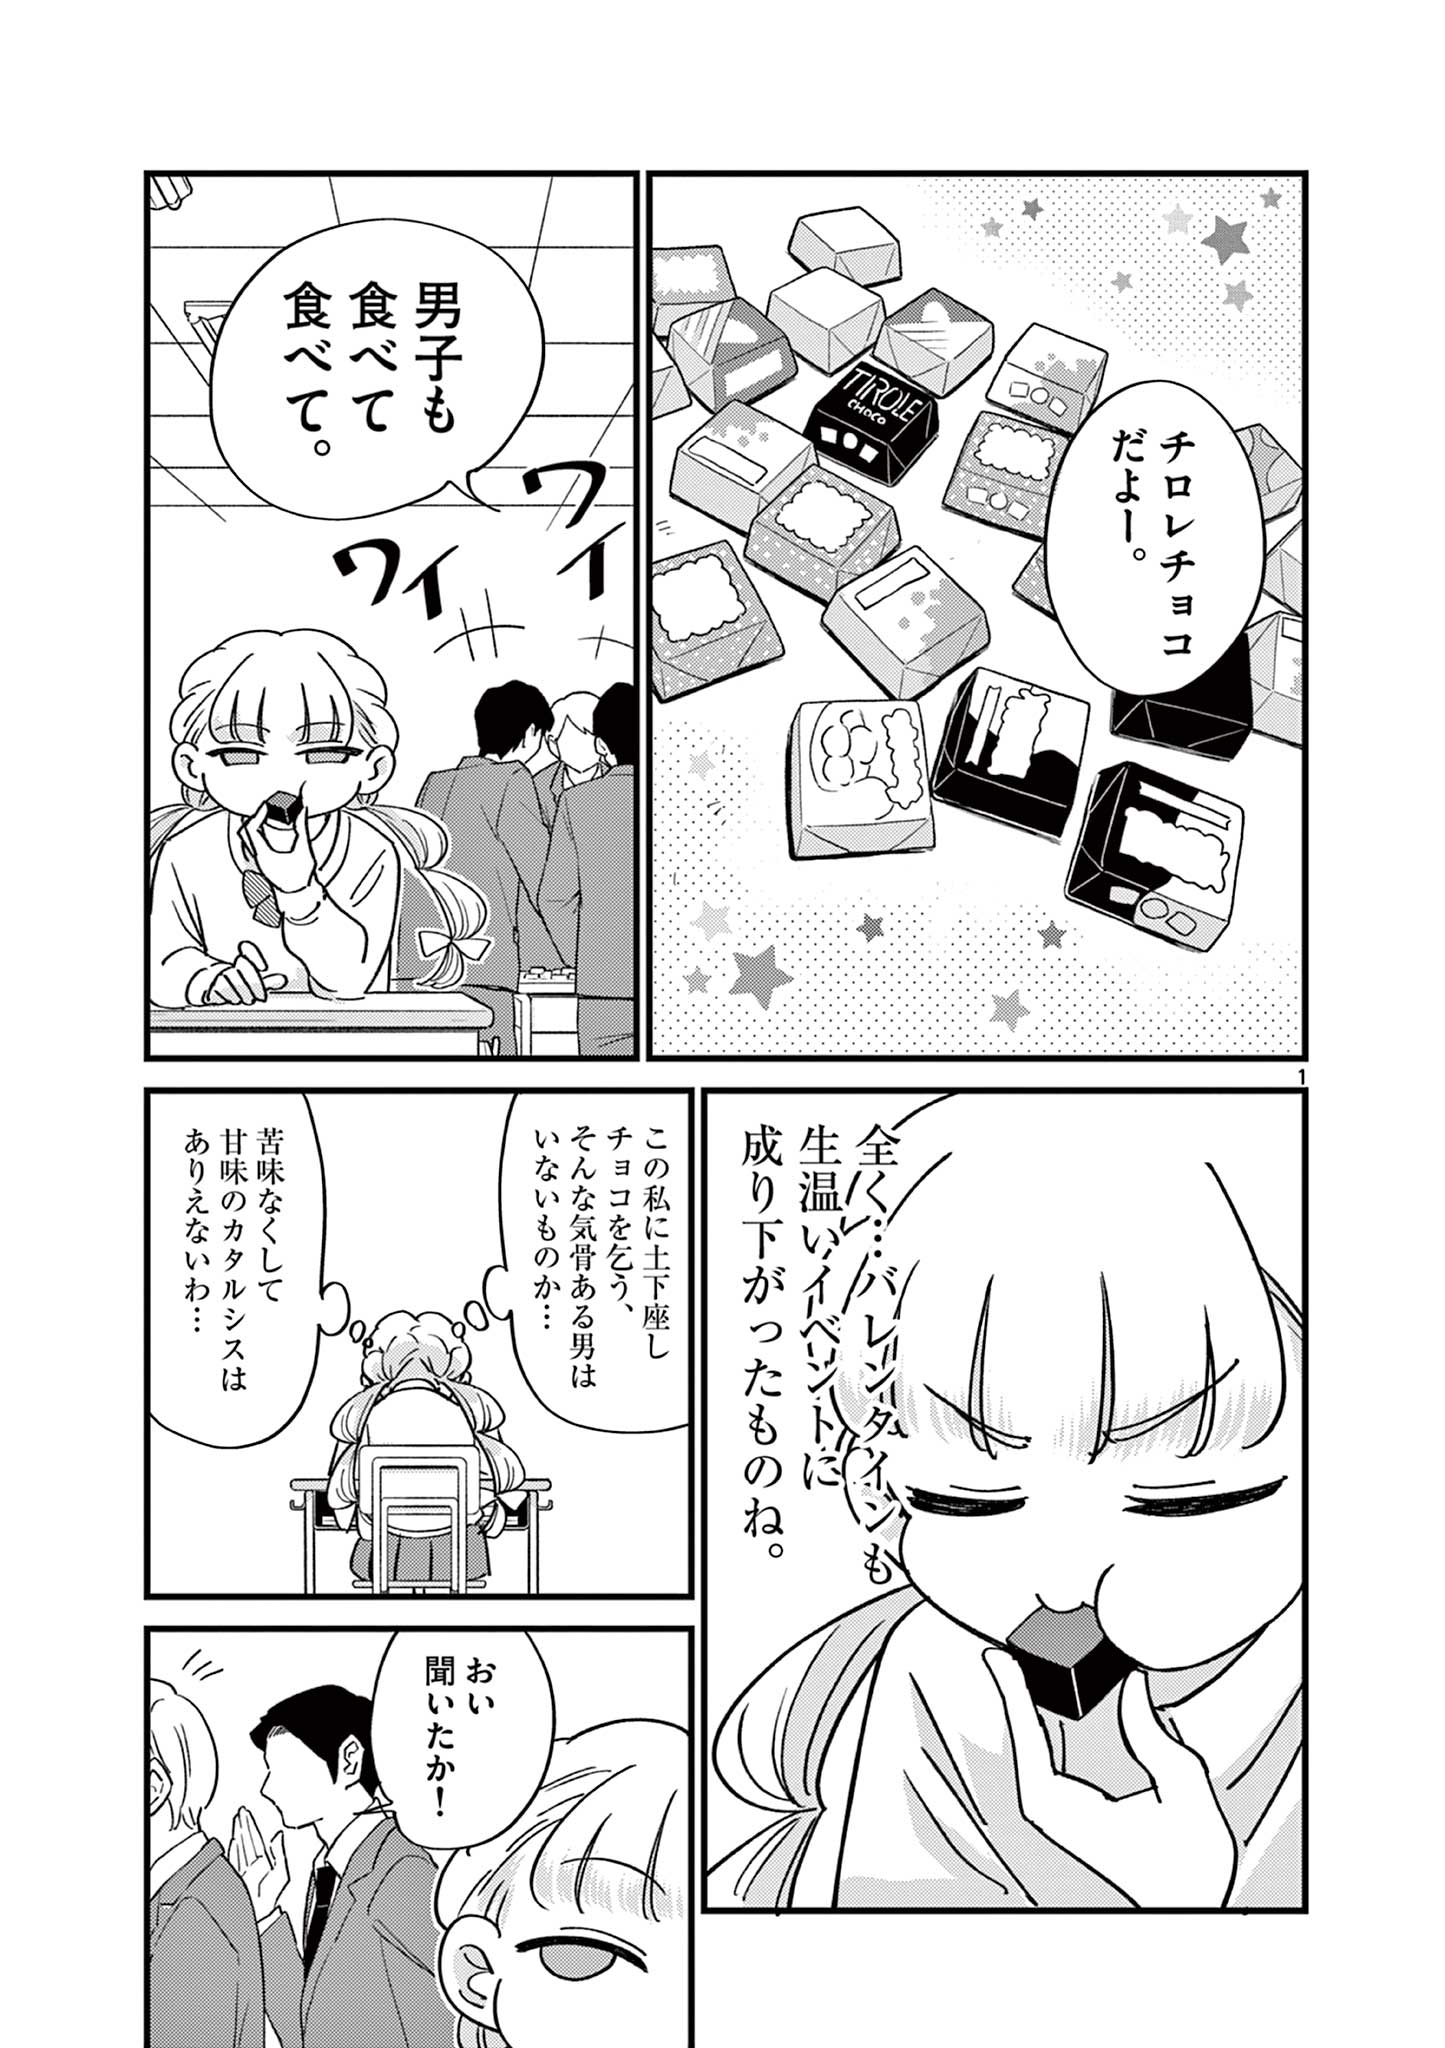 Ranka-chan wa Bitch ni Naritai - Chapter 21 - Page 1